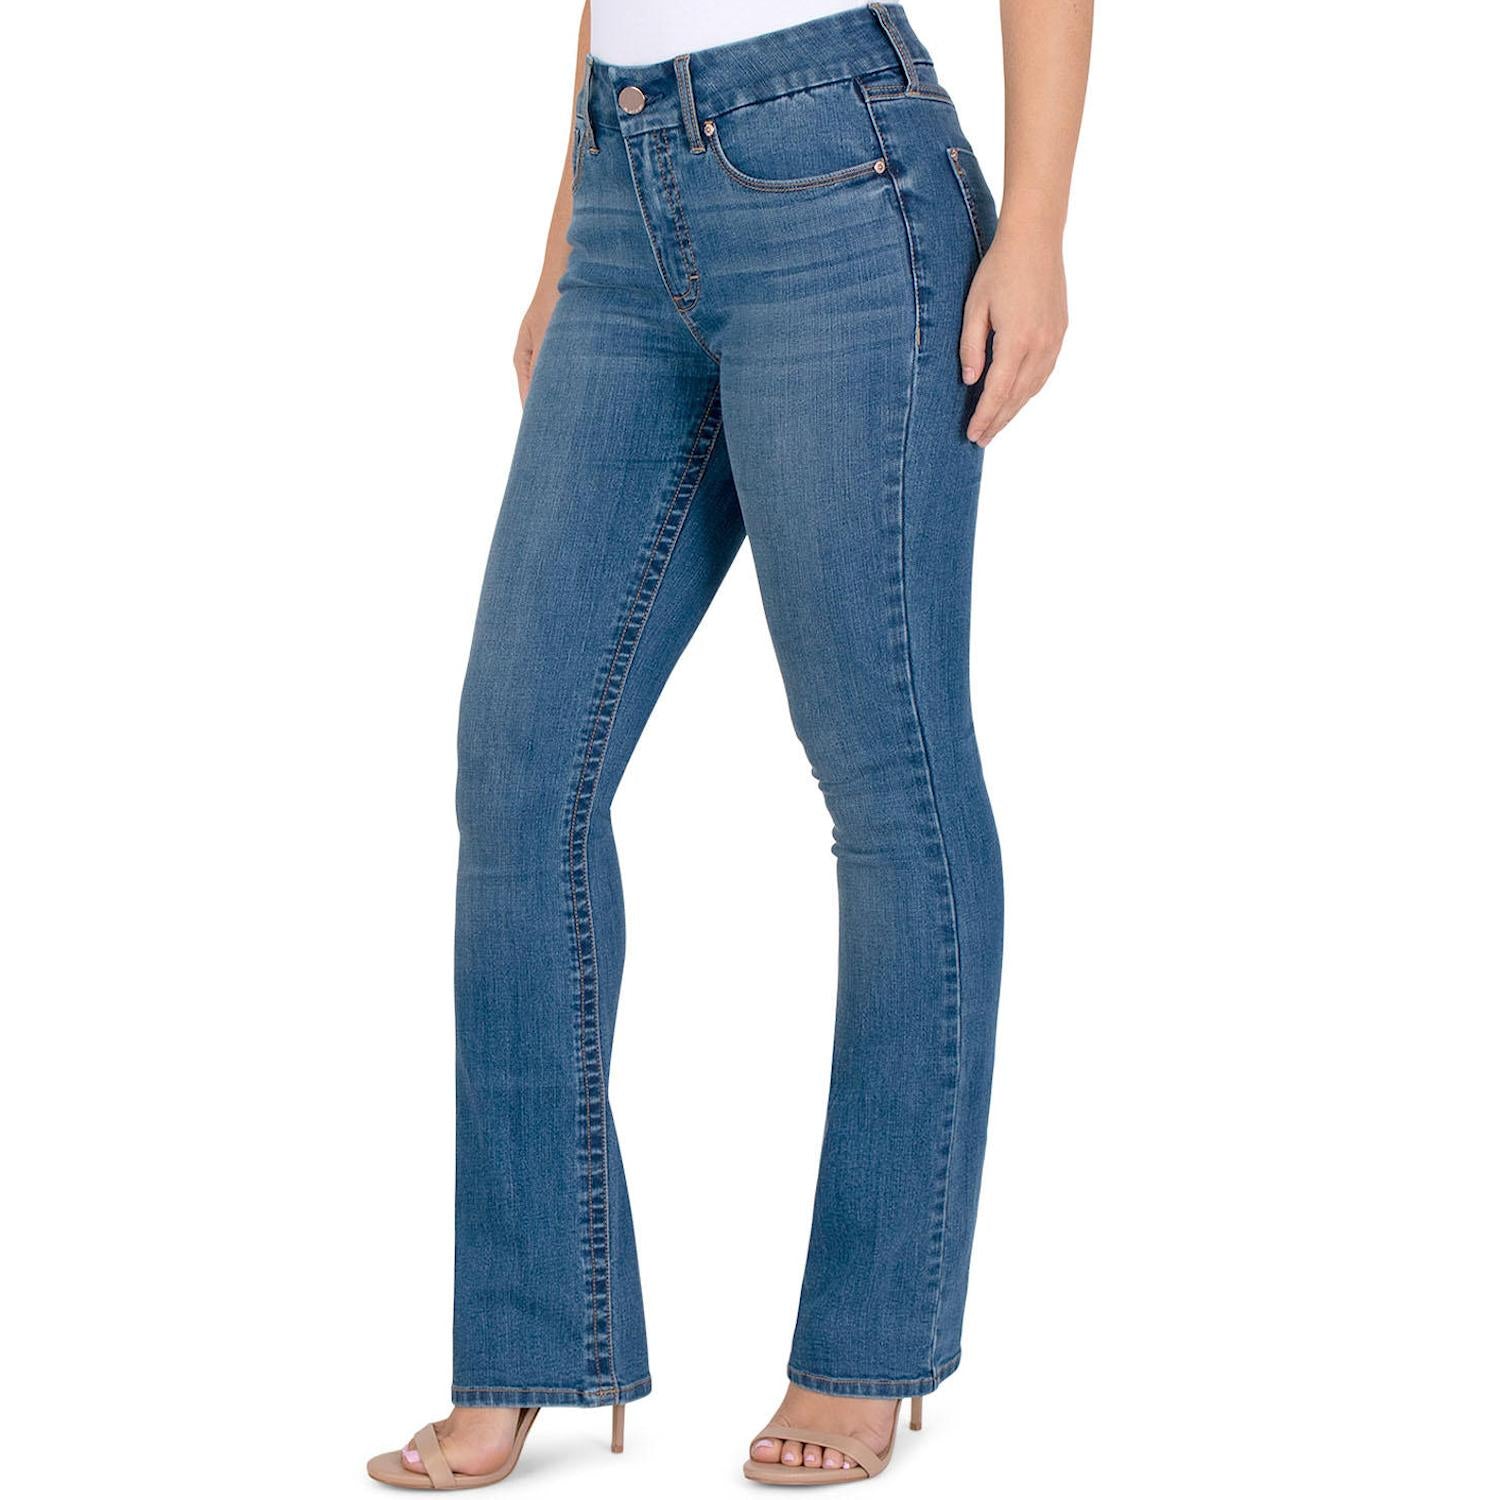 Seven7 Women's Tummyless High Rise Slimming Control Panel Skinny Jeans